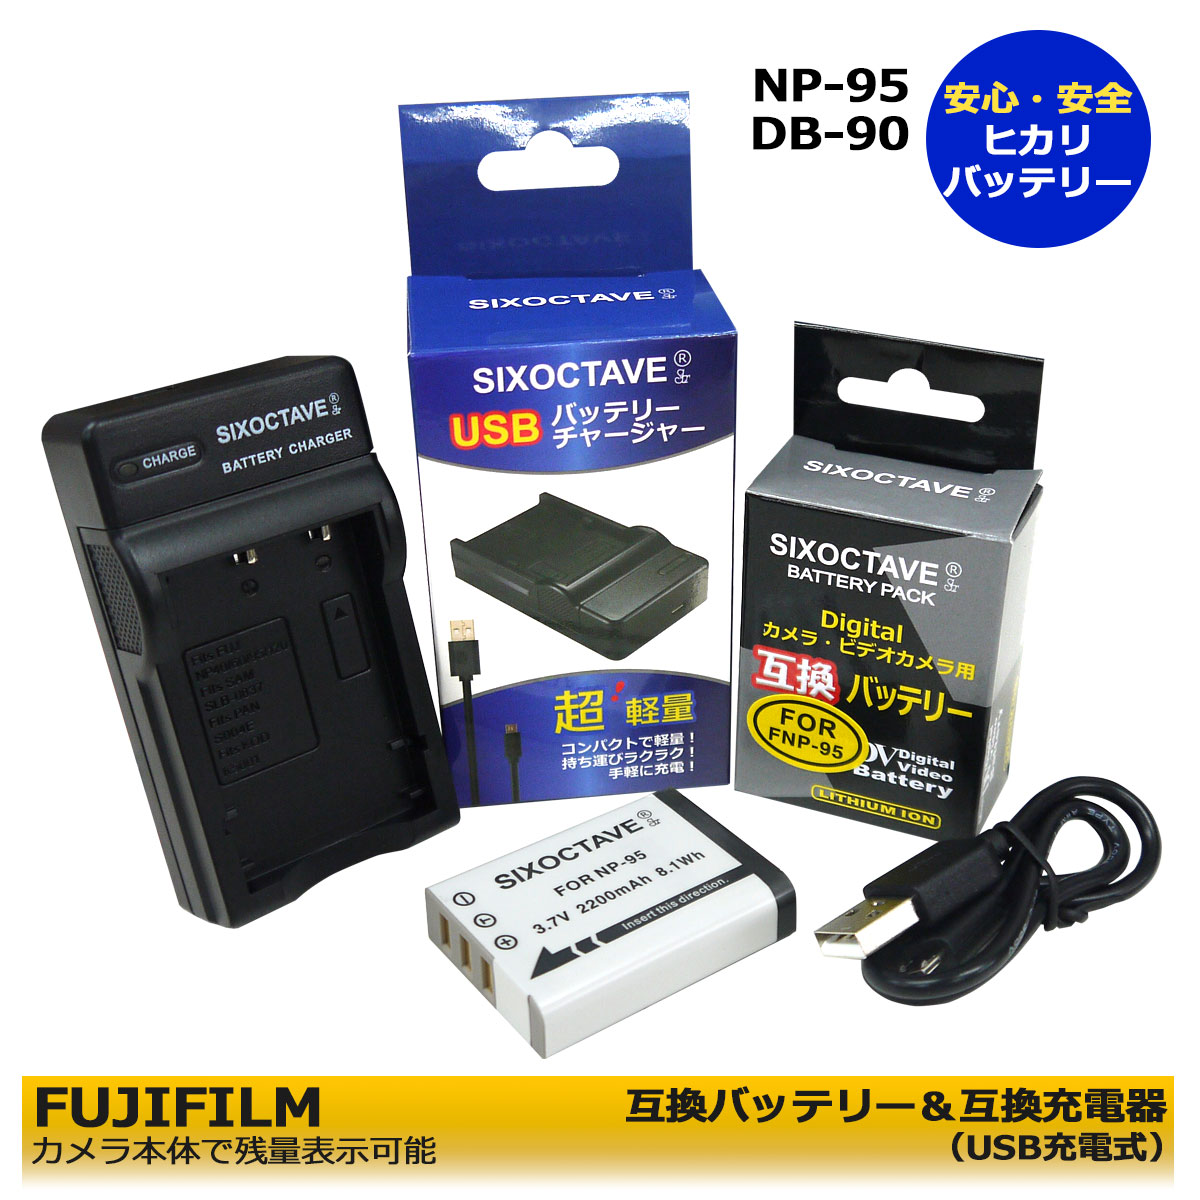 NP-95 富士フィルム 互換バッテリー 1個（カメラ本体で残量表示可能）と 互換USB充電器 の 2点セット FinePix F30 / FinePix F31fd / FinePix REAL 3D W1 / FinePix REAL 3Dシリーズ コンパクトデジタルカメラ対応可能。